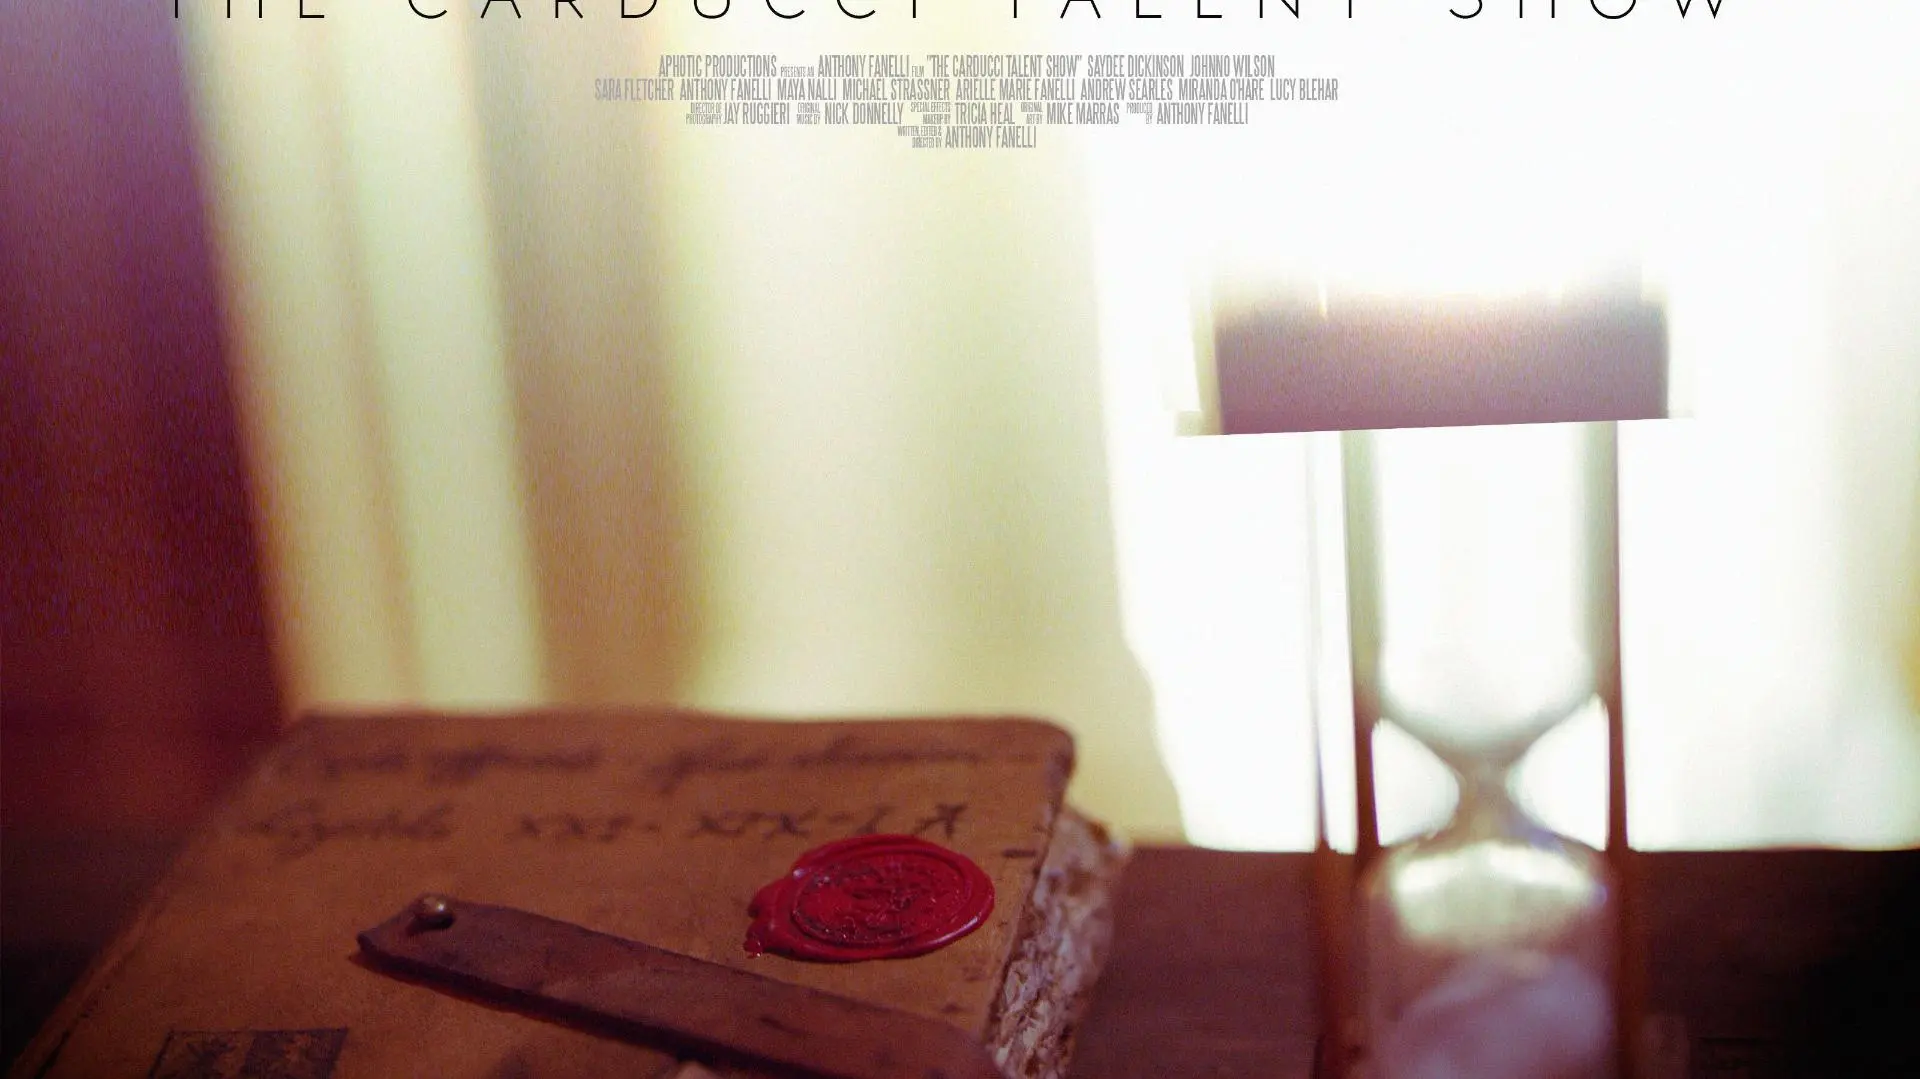 The Carducci Talent Show_peliplat